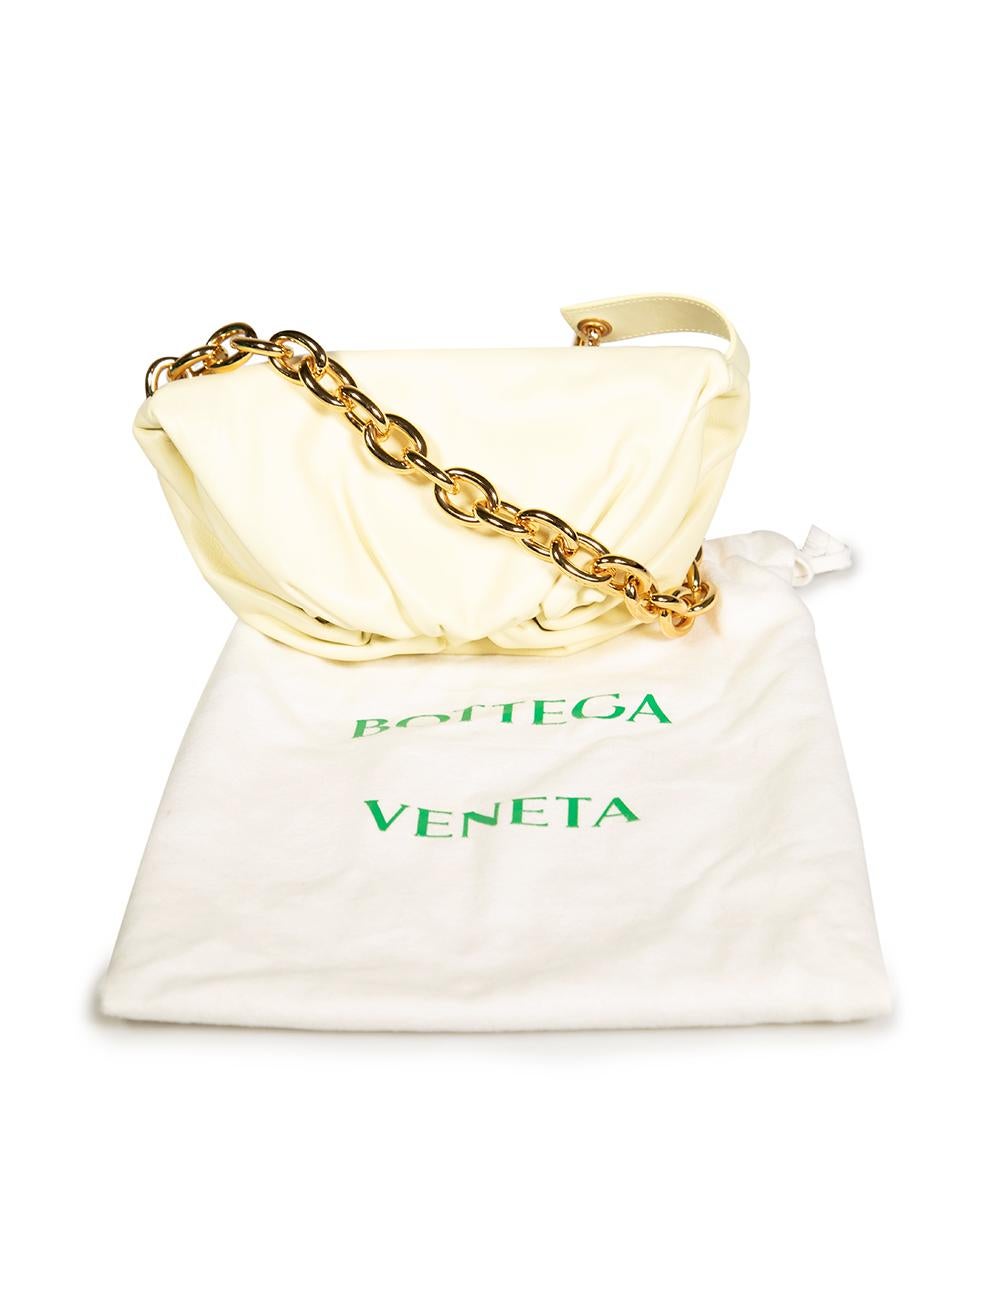 Bottega Veneta Yellow Leather Chain Pouch Crossbody Bag For Sale 4